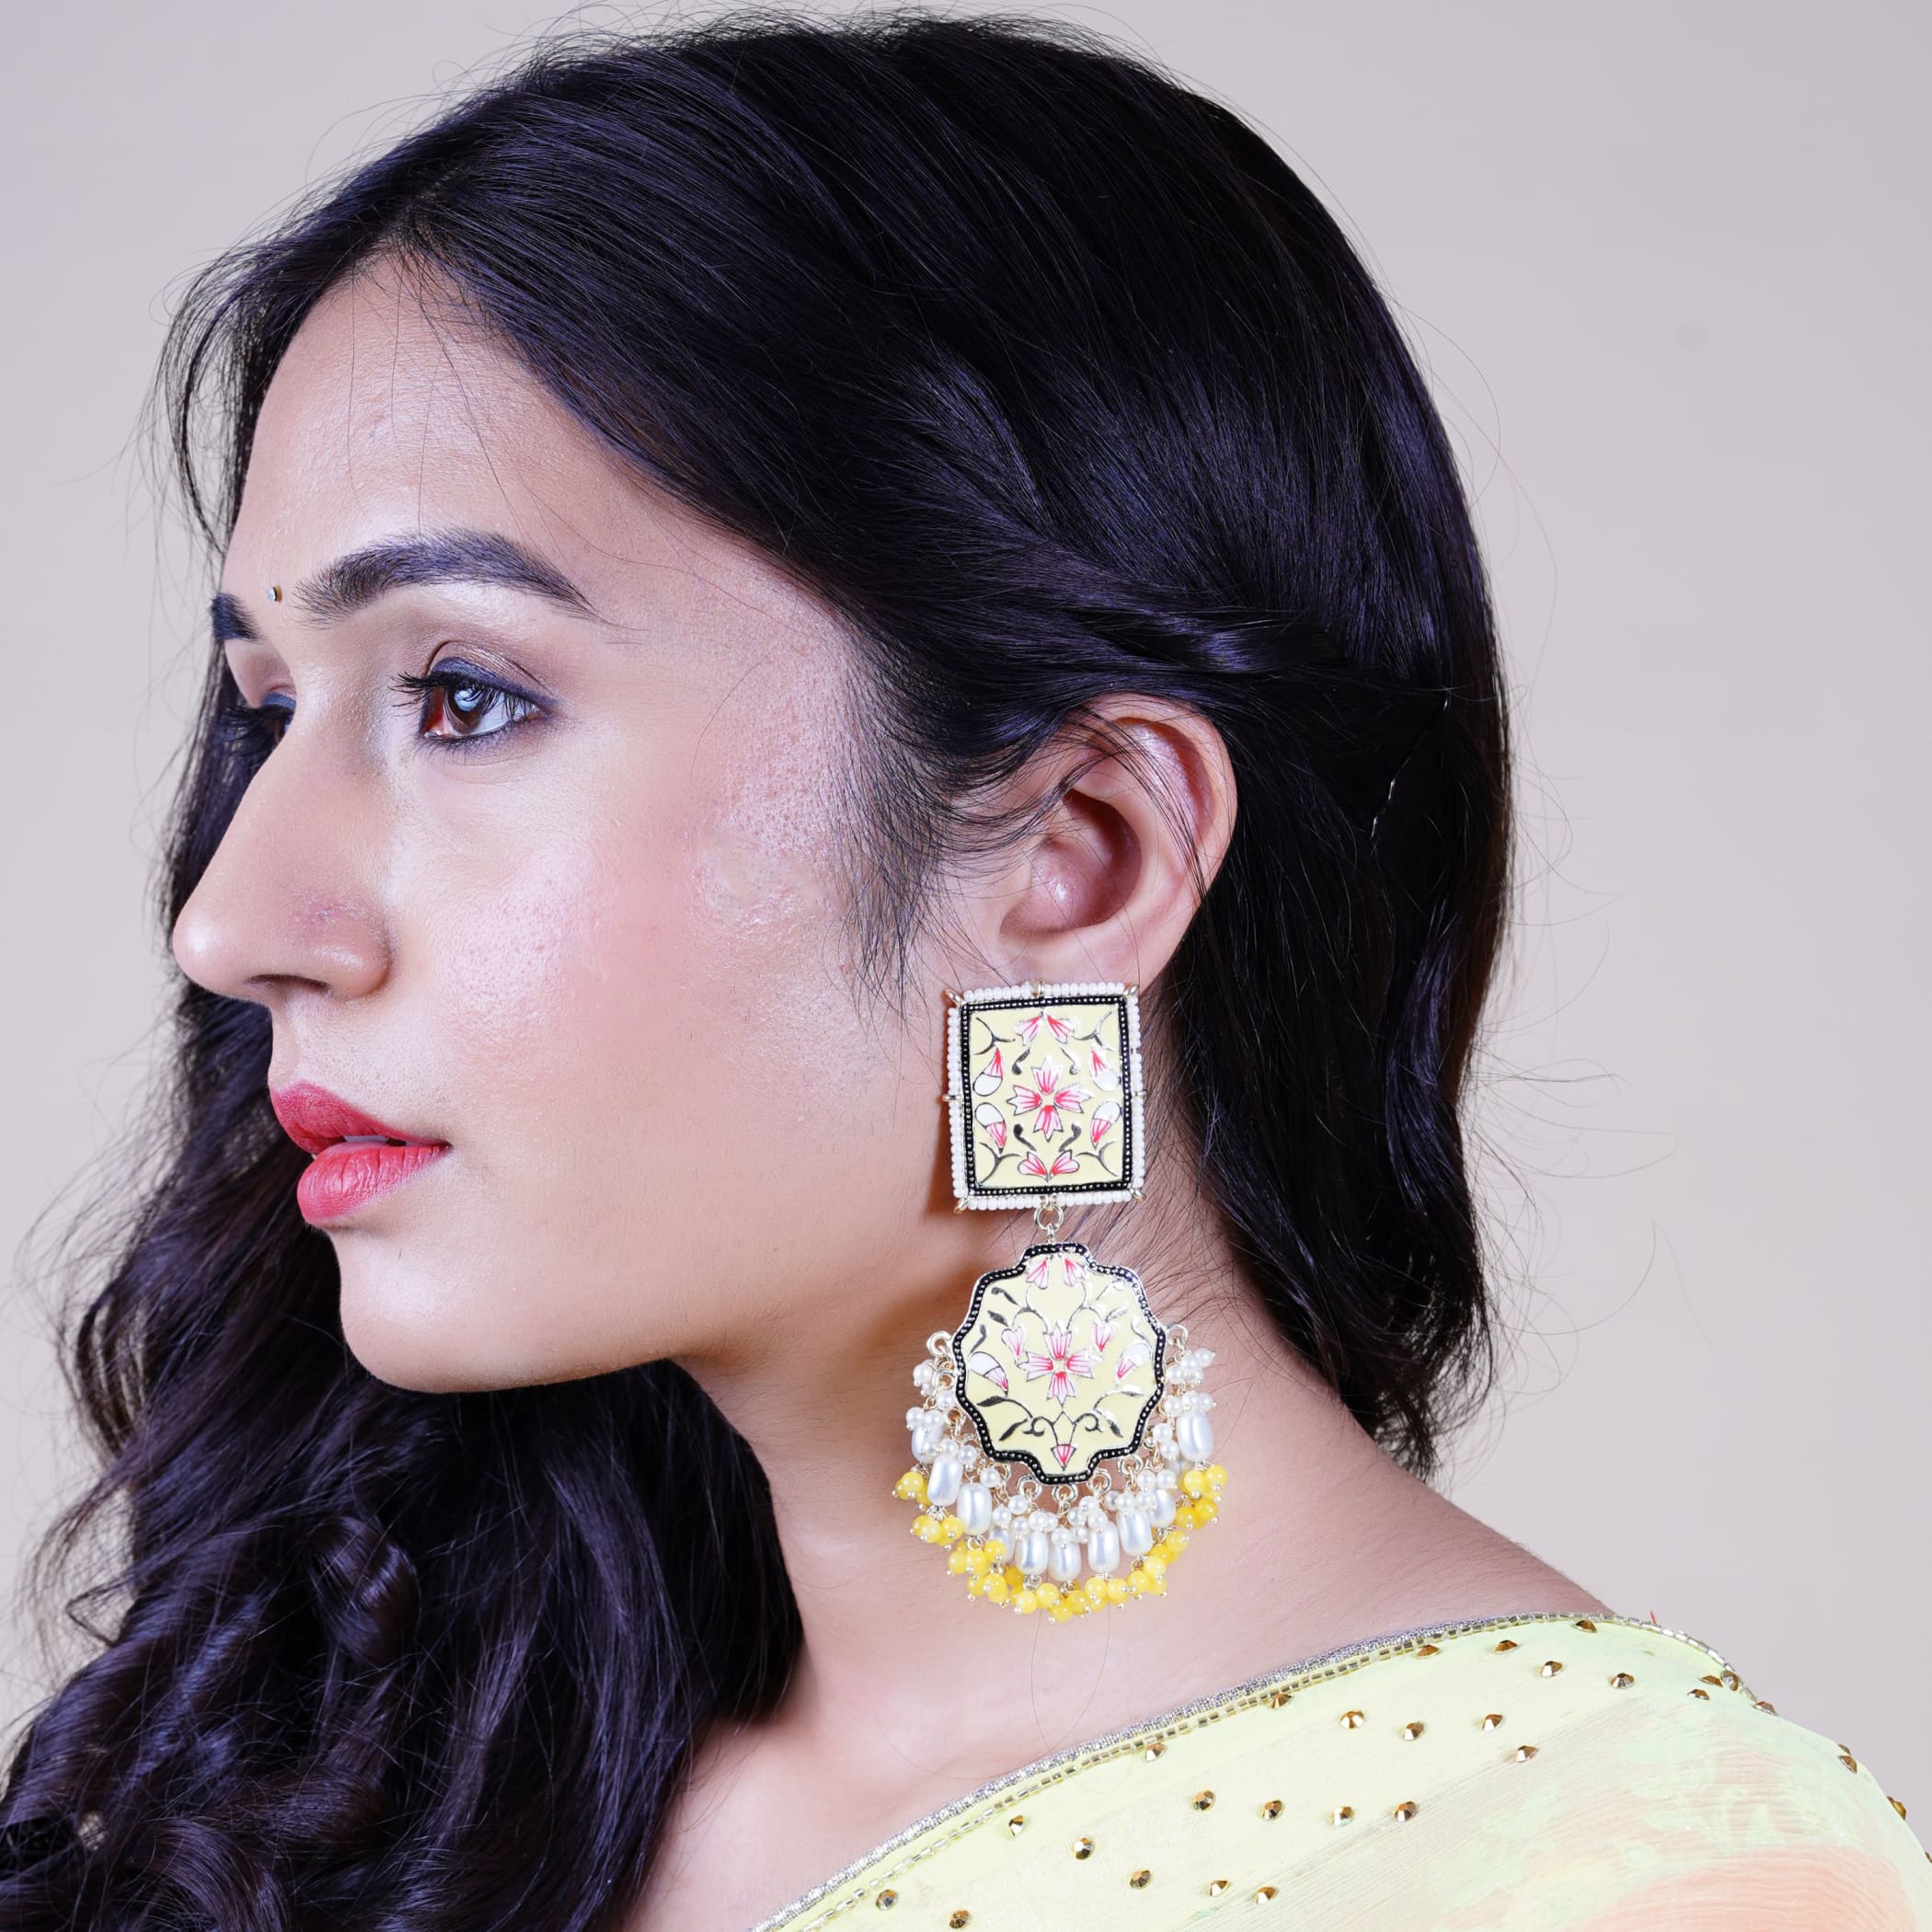 Indian earrings bollywood jhumka for women meenakari